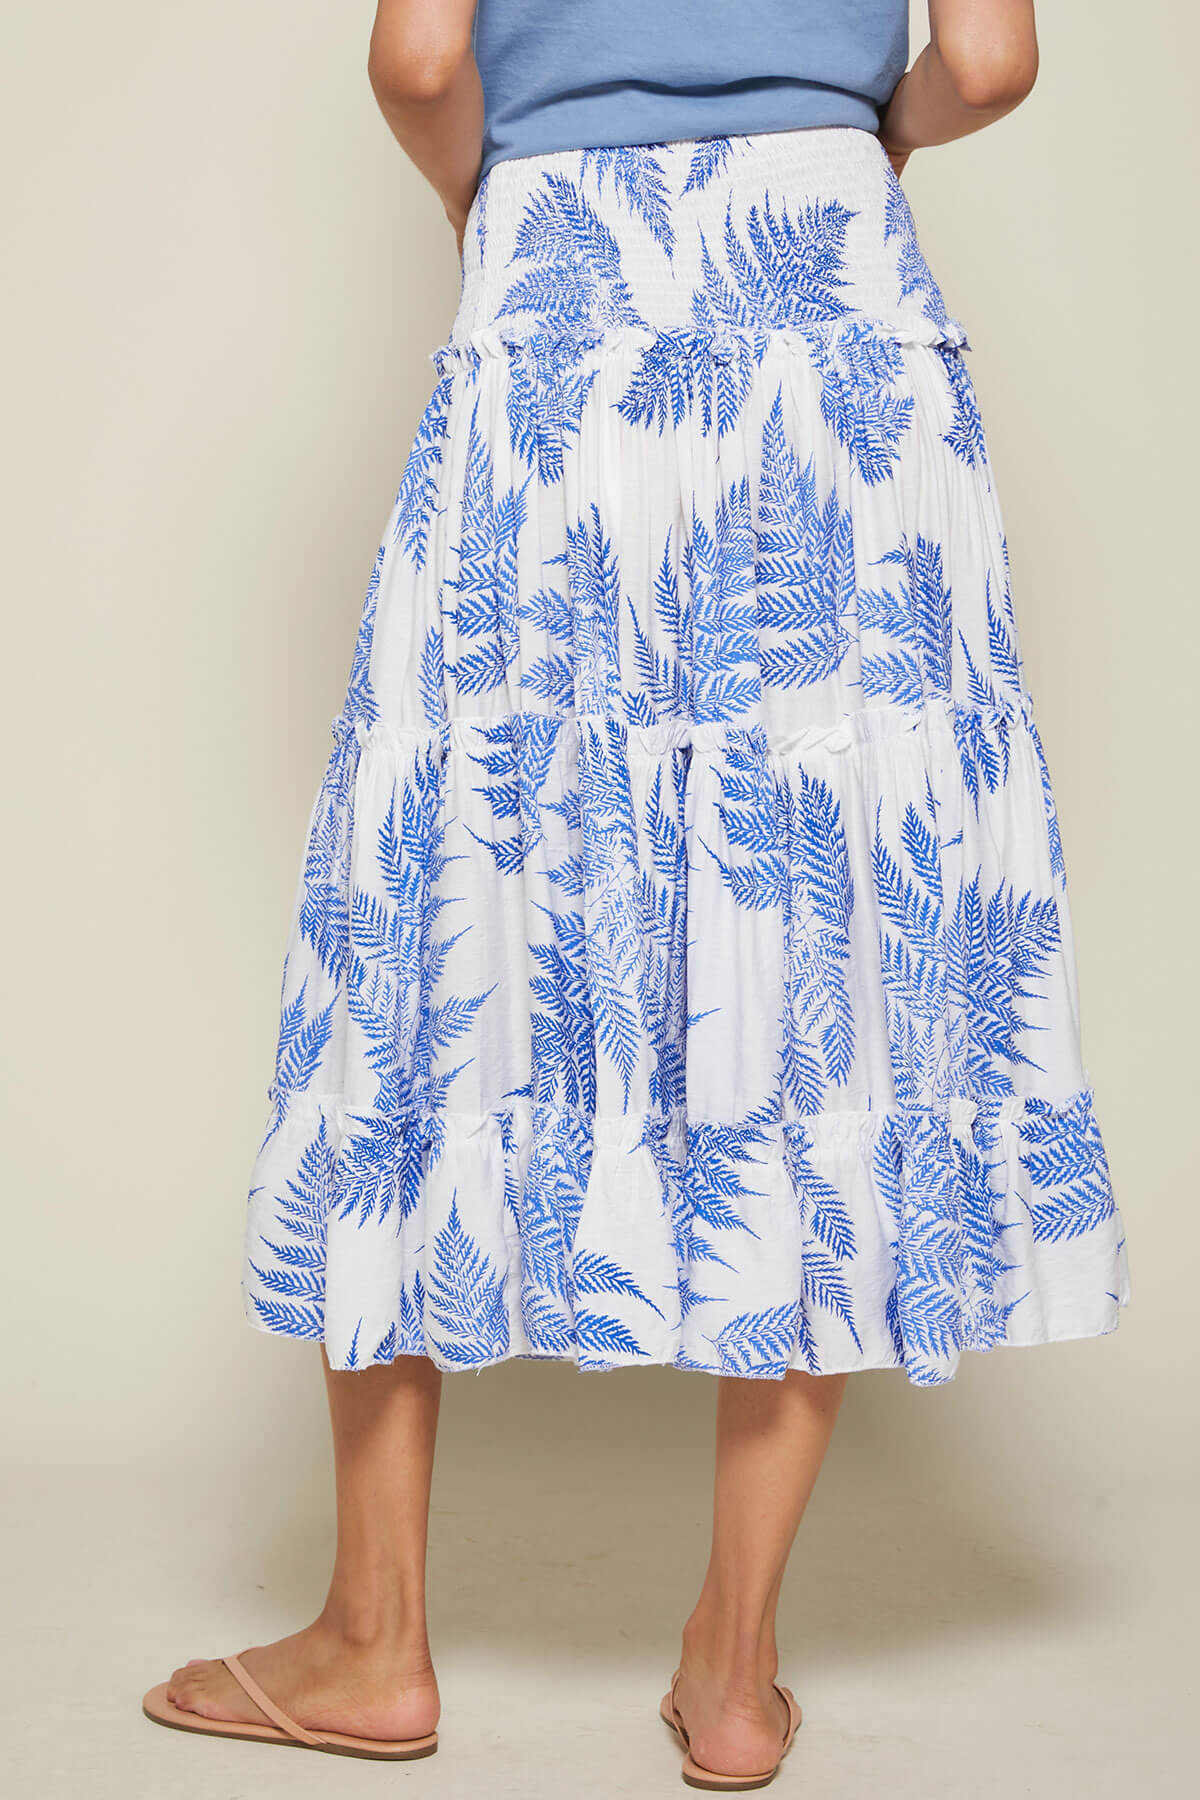 Eesome Palm Print Skirt